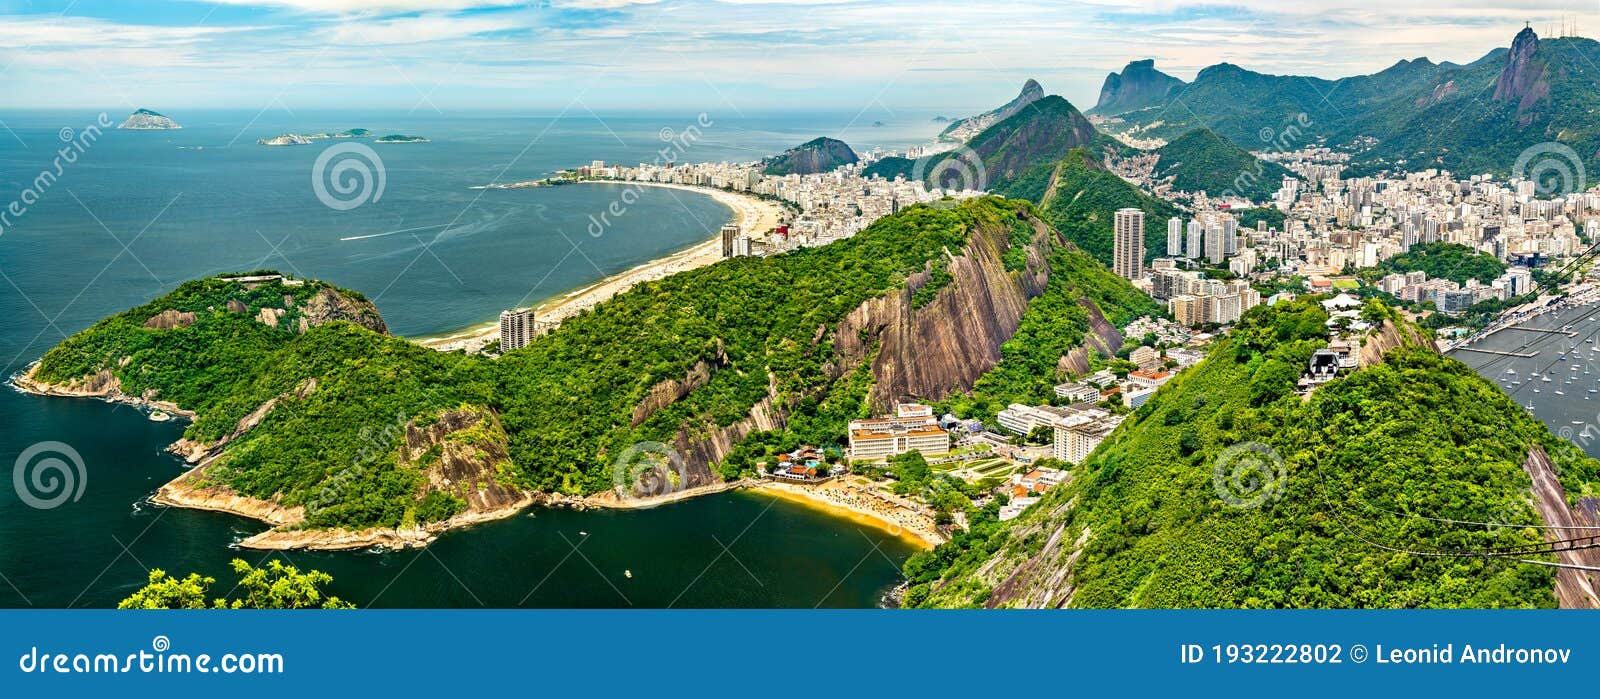 view of copacabana and botafogo in rio de janeiro, brazil